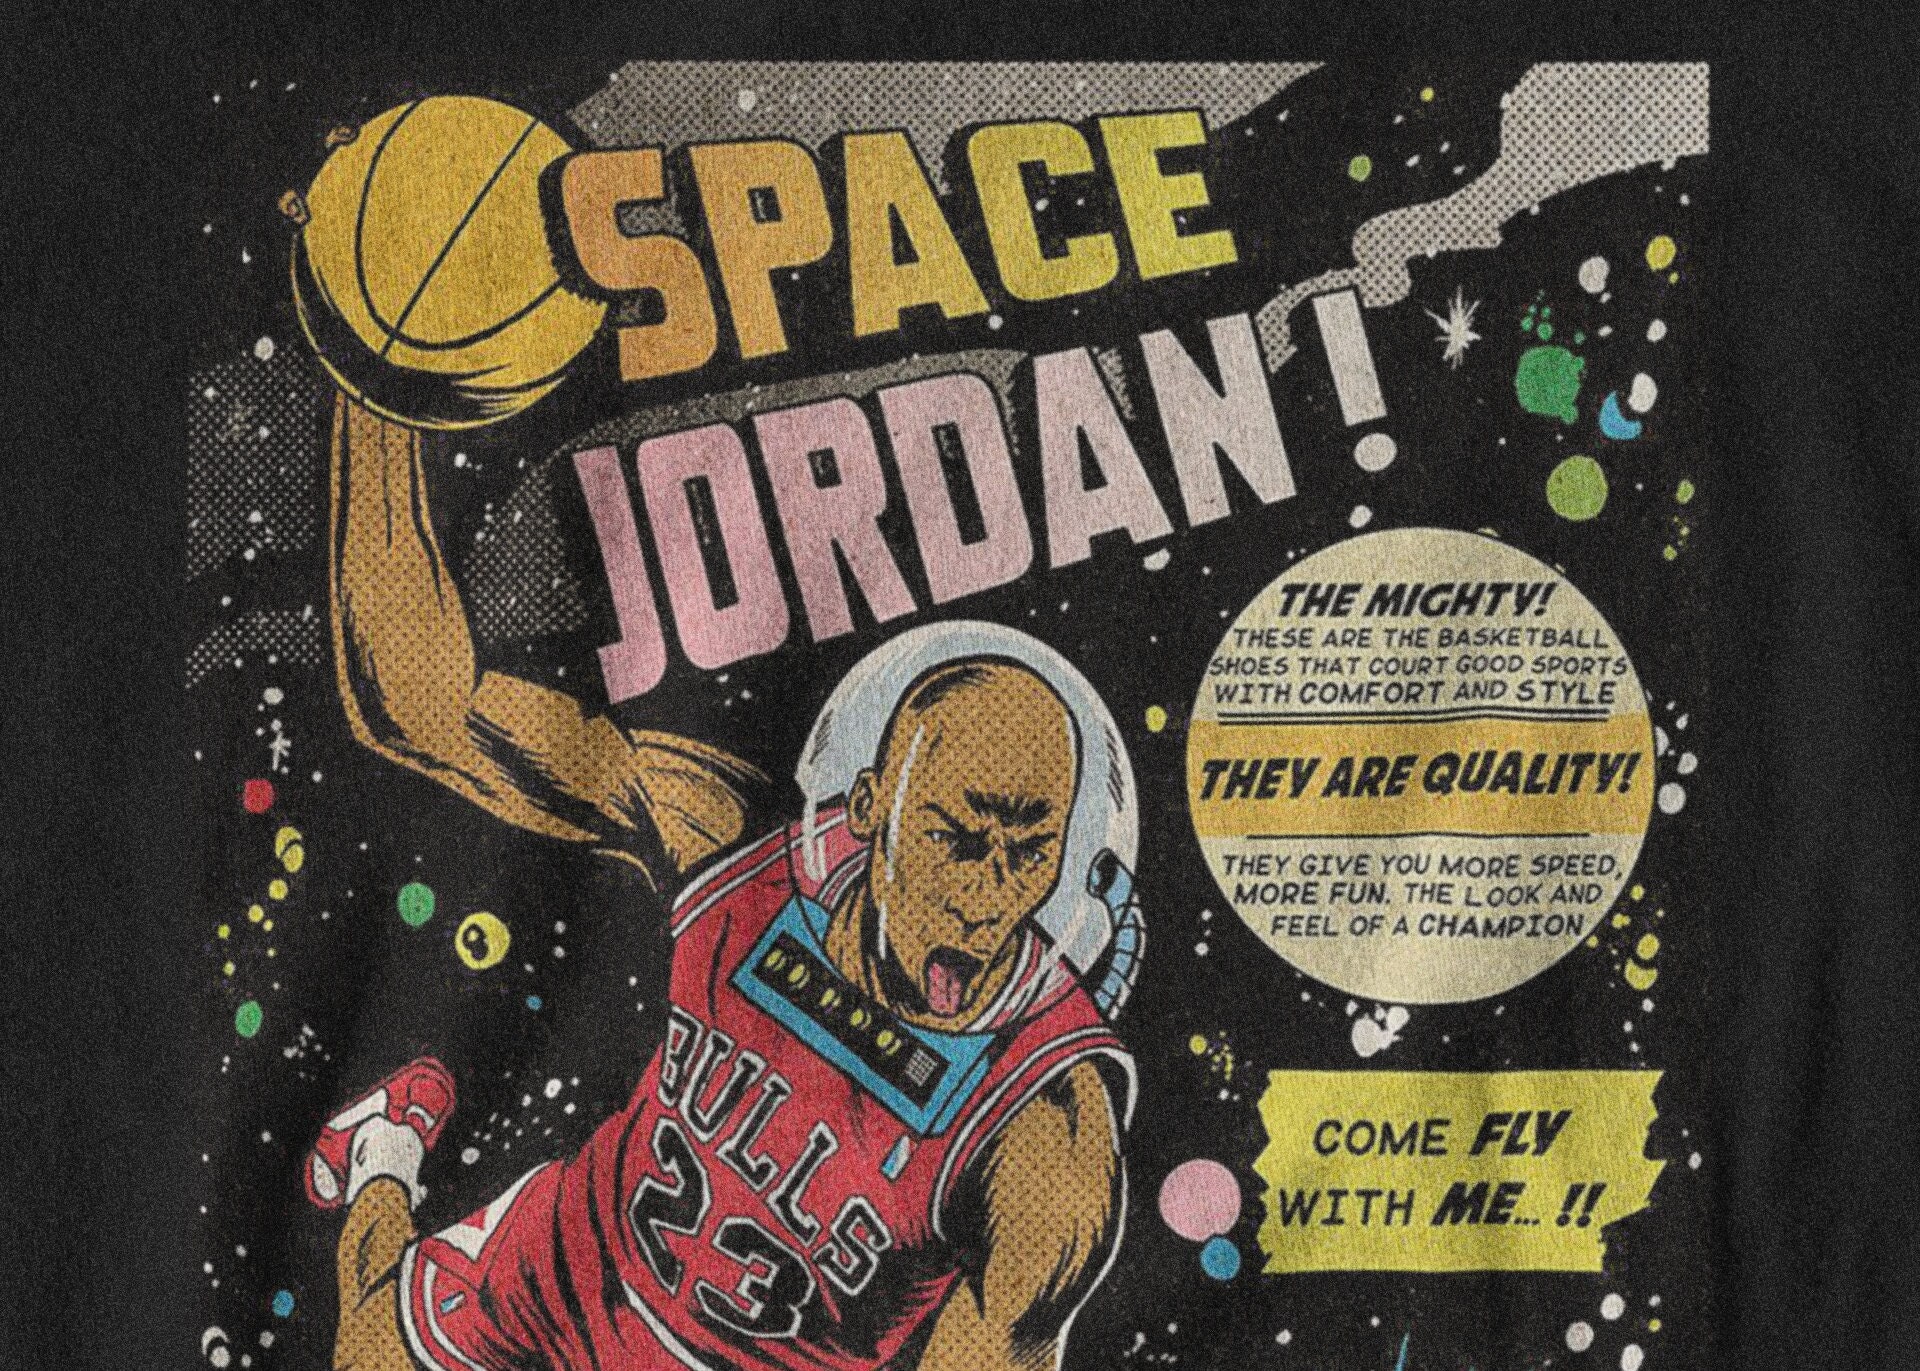 Michael Jordan Basketball Graphic T-Shirt  Michael jordan basketball,  Jordan basketball, Michael jordan